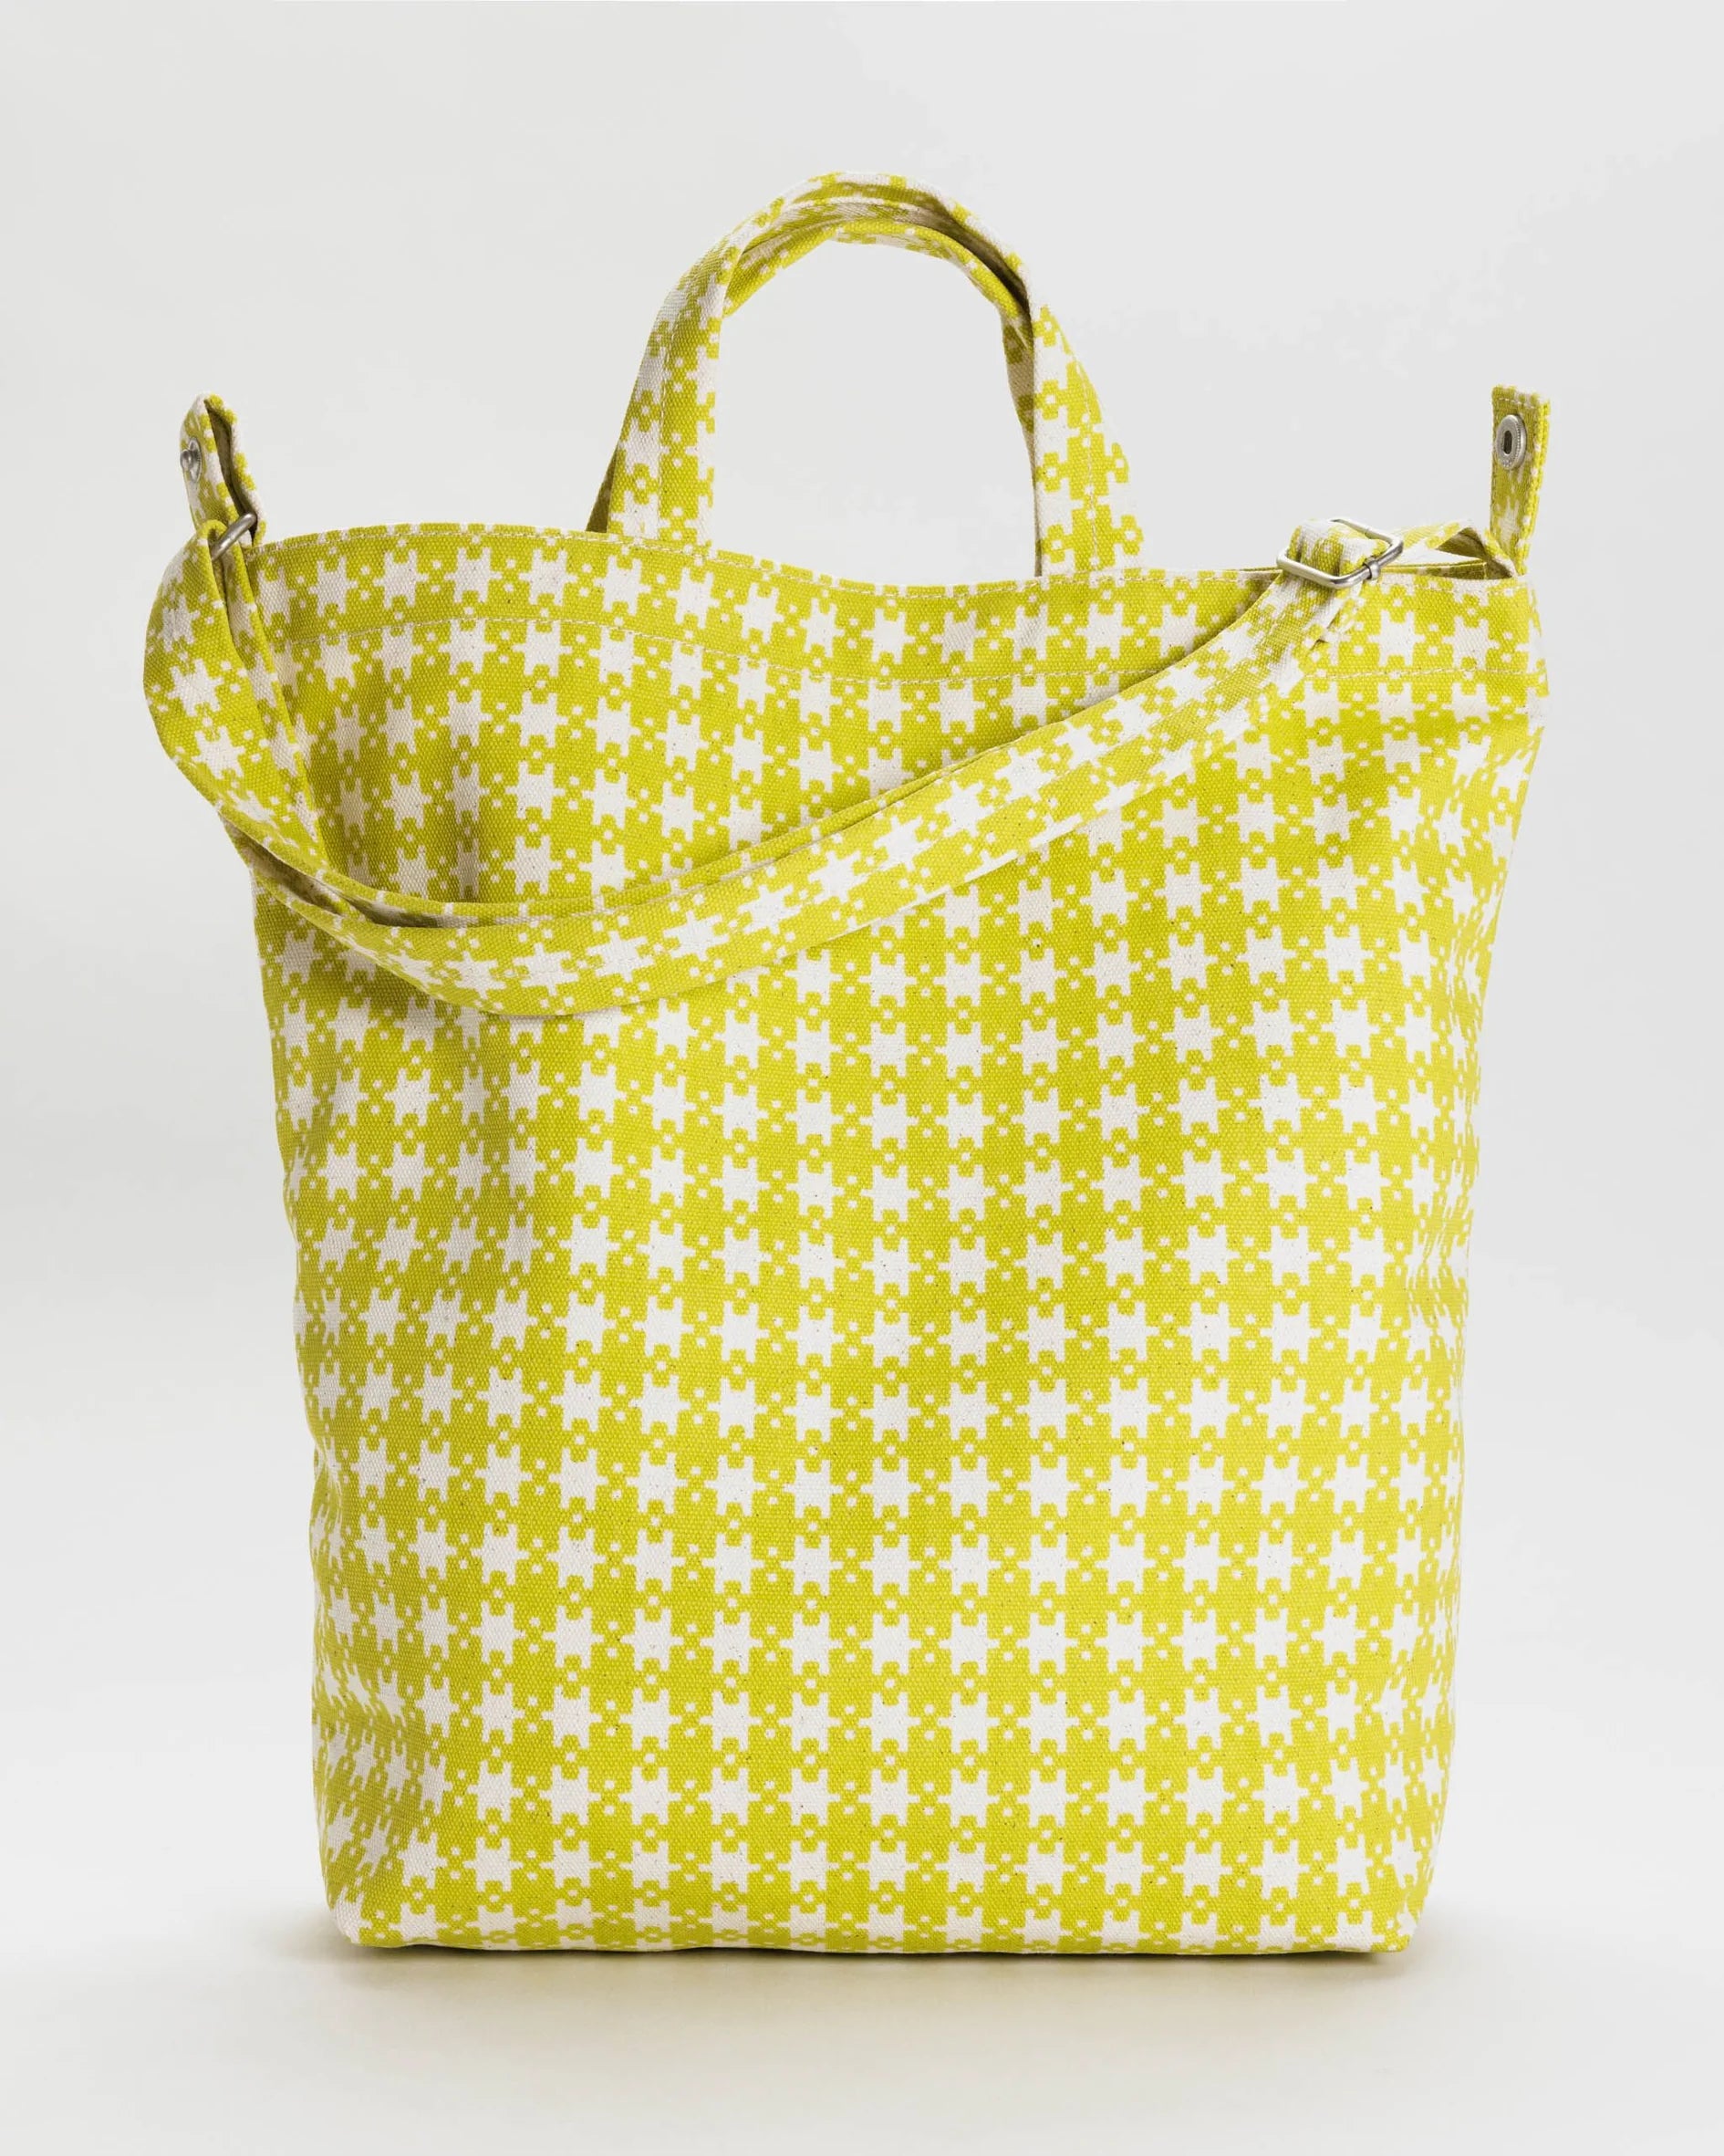 Brown Gingham Tote Bag Checkered Shopping Bag Reusable 